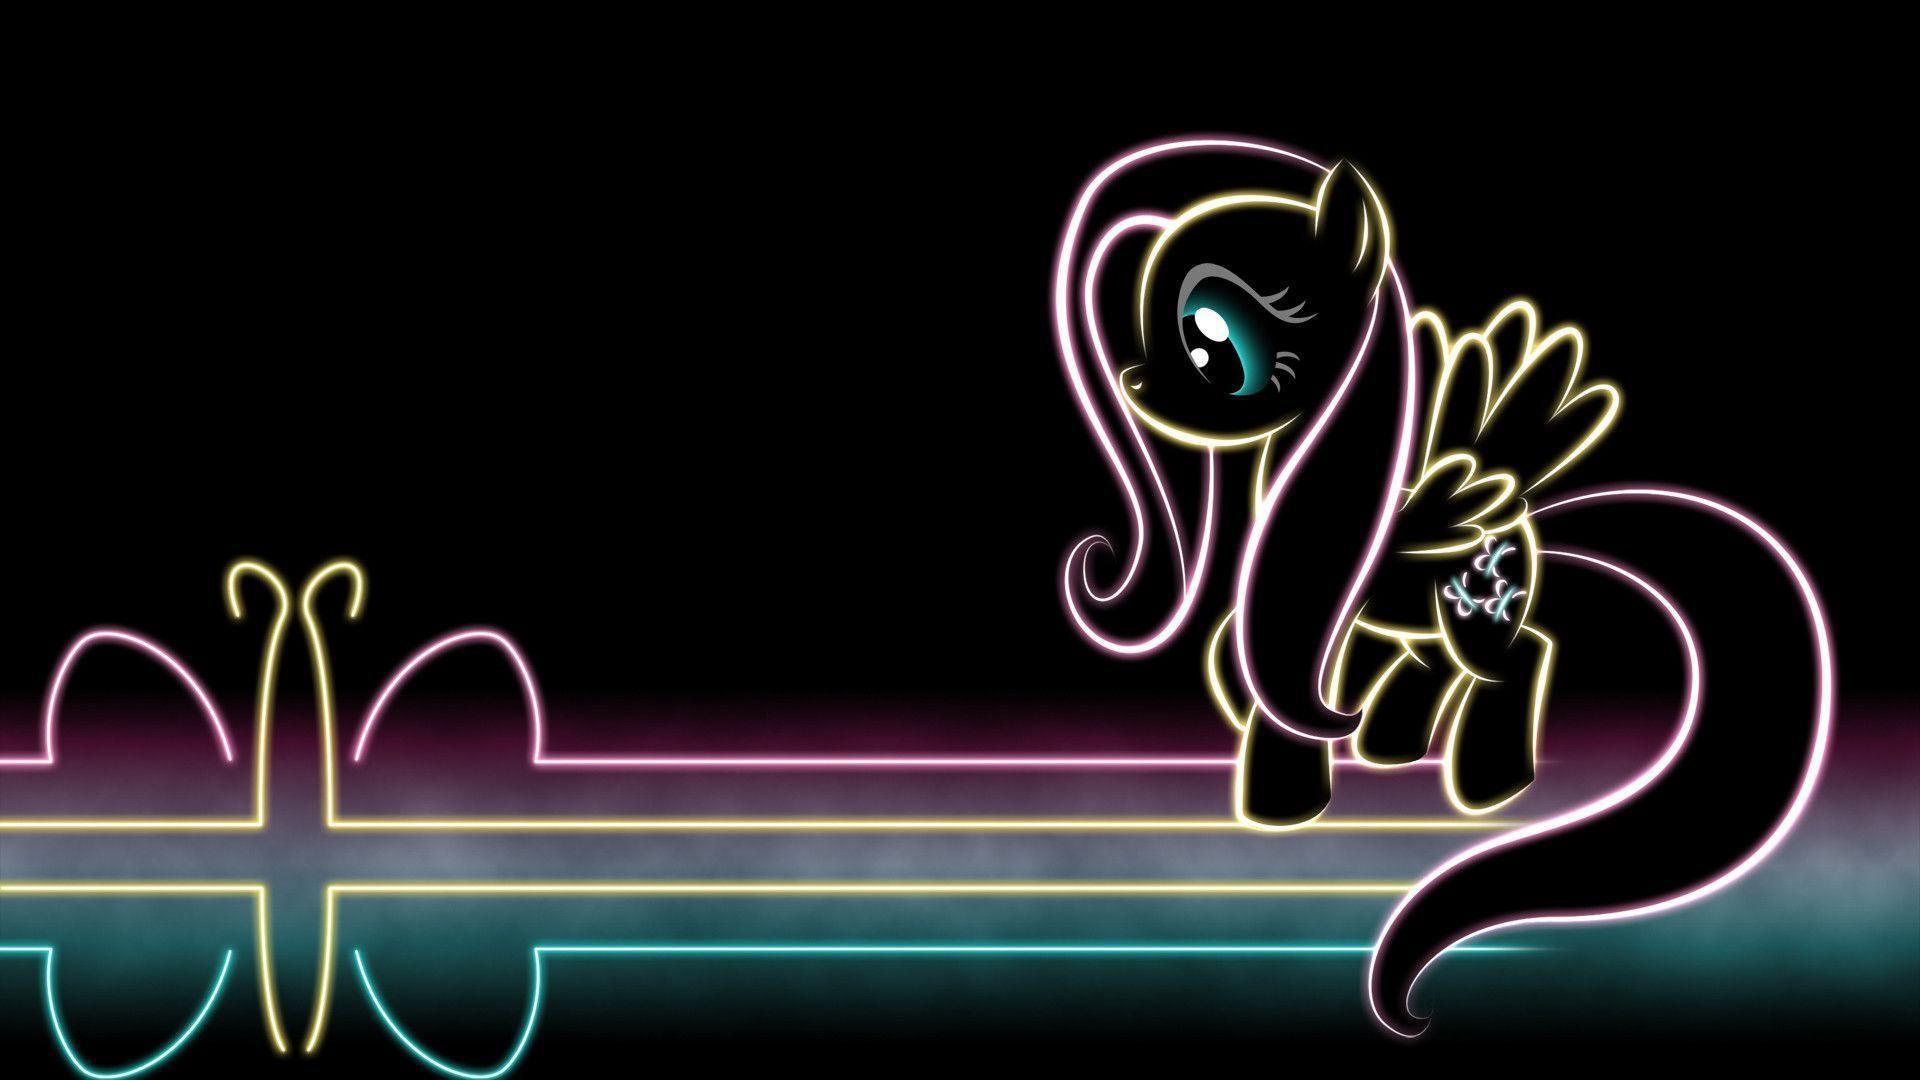 MLP Glow Wallpaper Little Pony Friendship is Magic Wallpaper